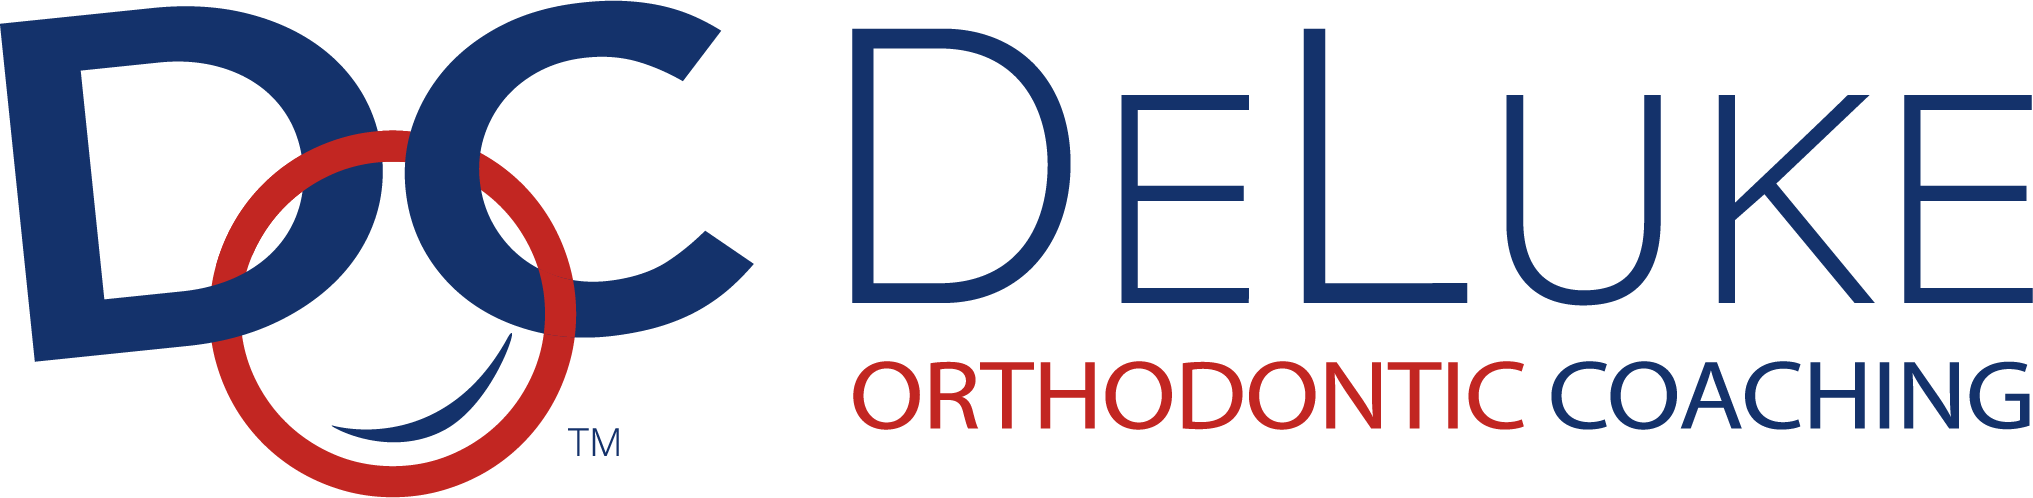 DeLuke Orthodontic Coaching Logo